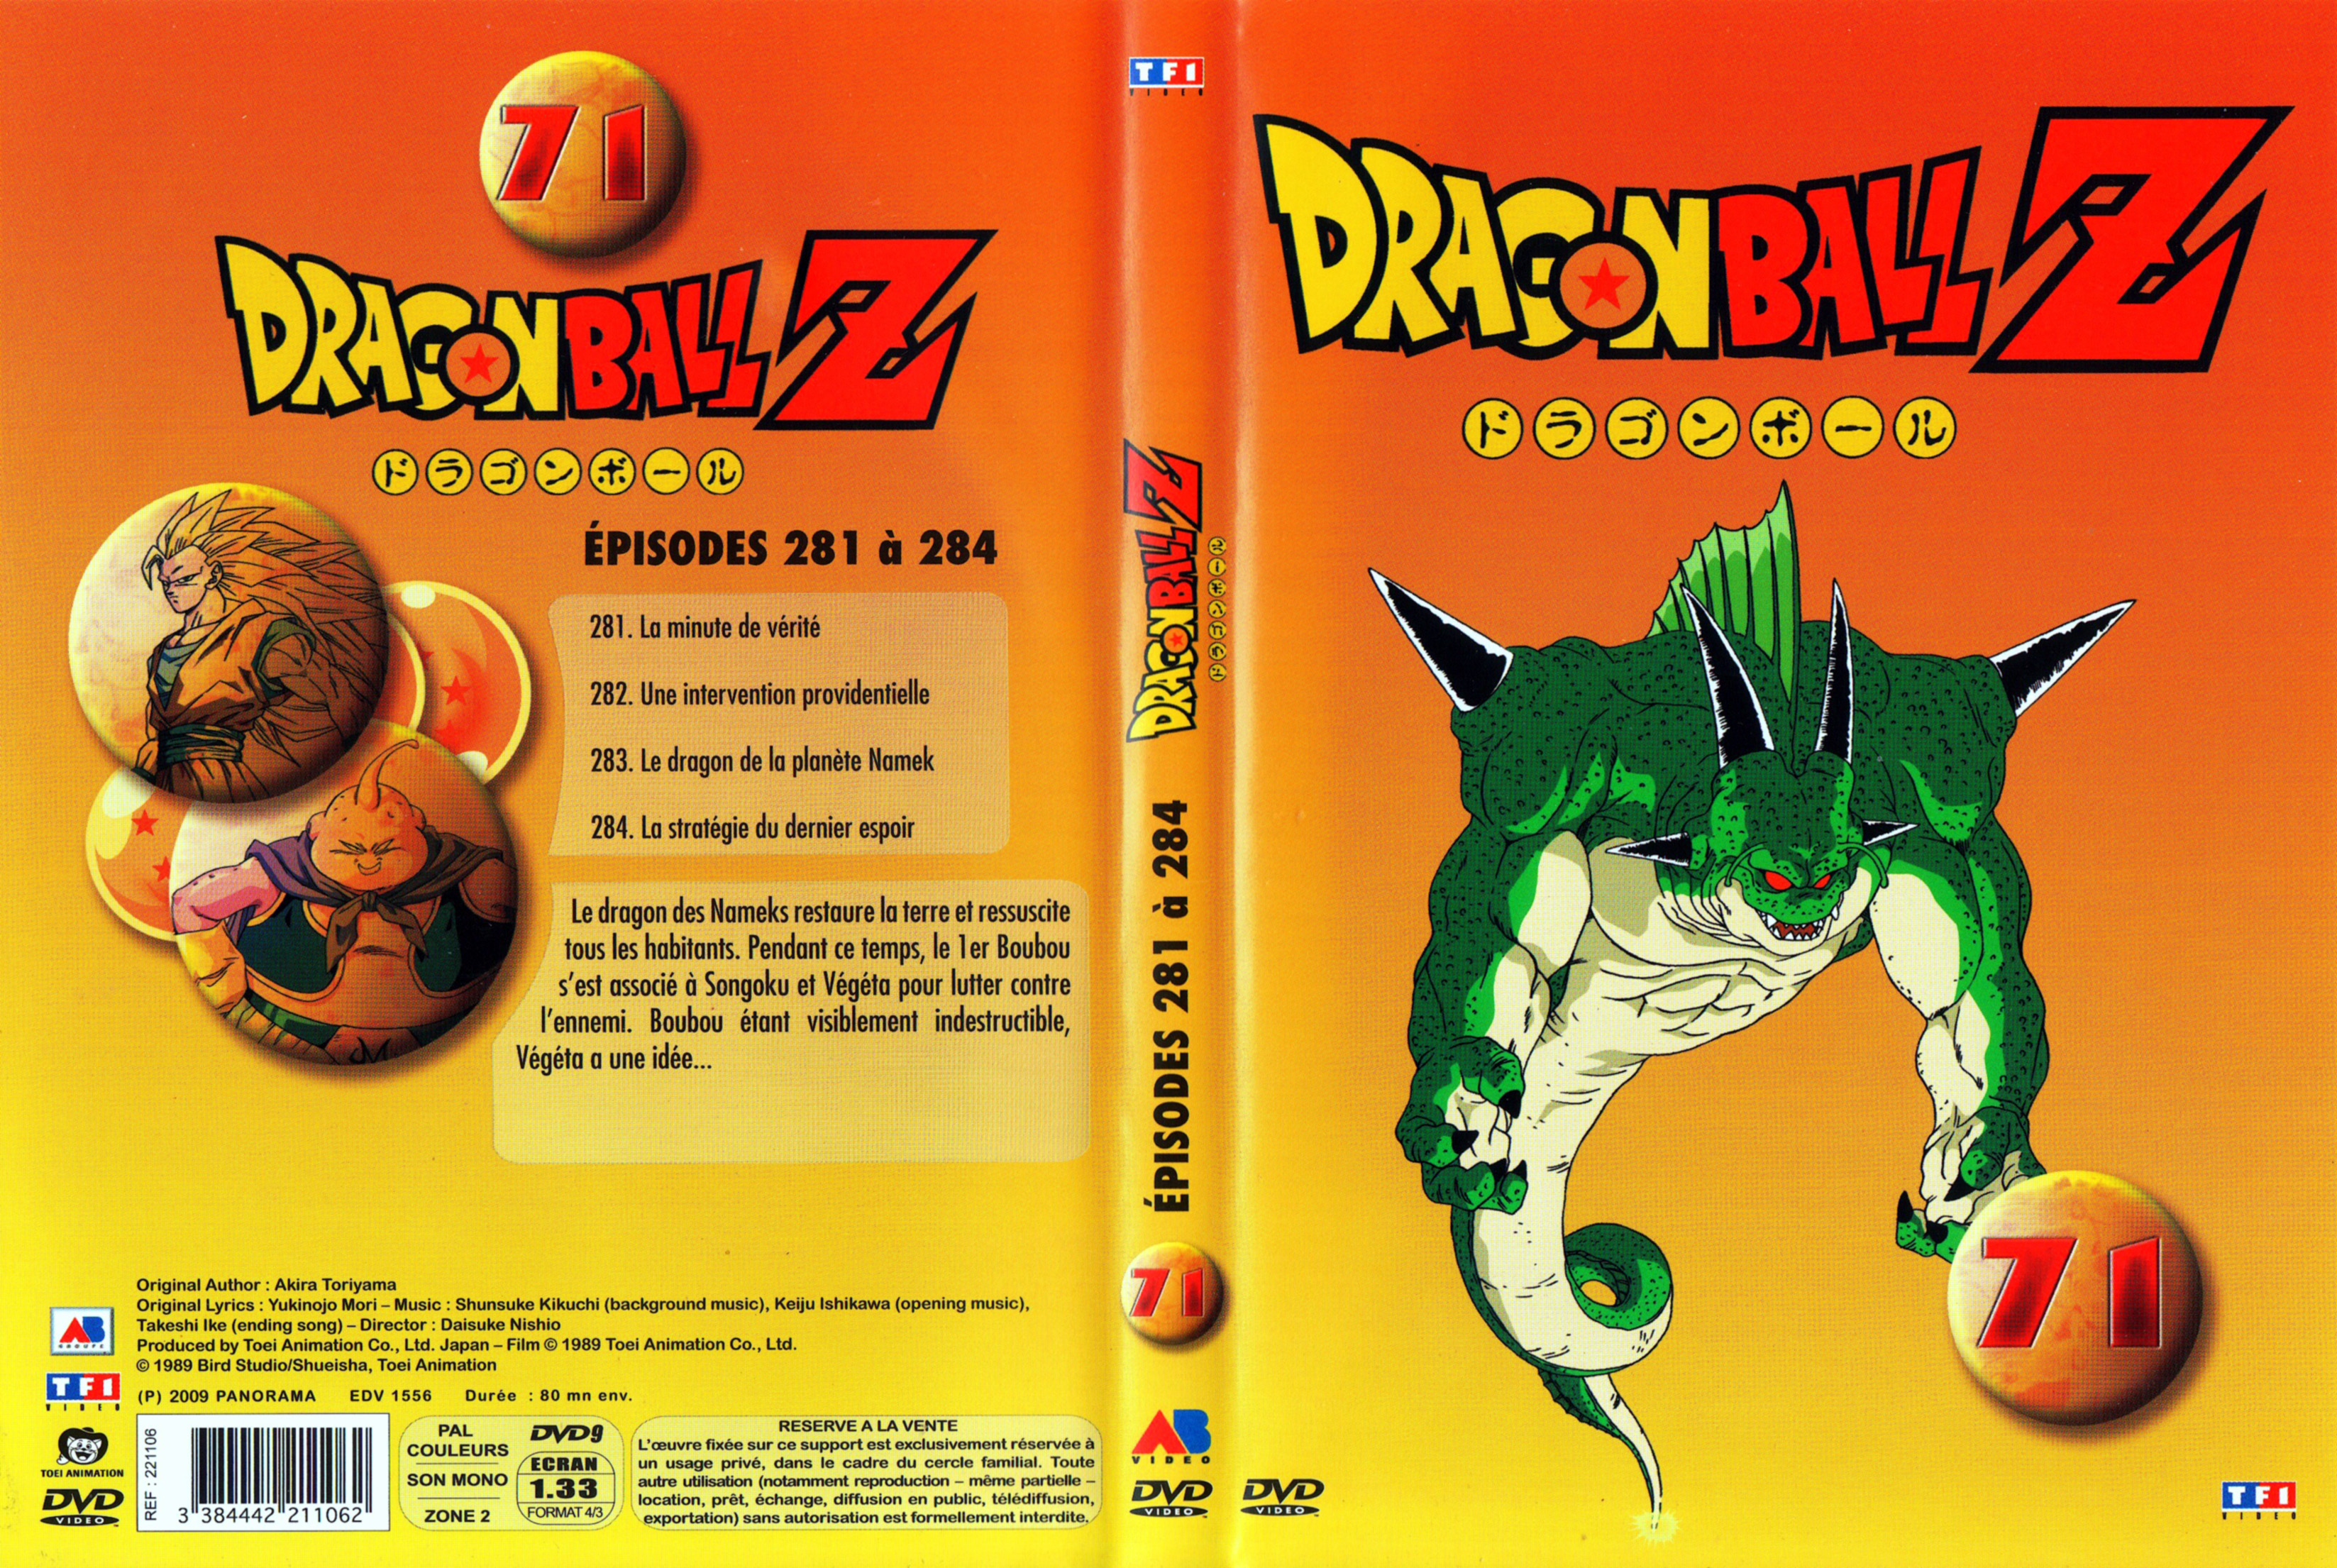 Jaquette DVD Dragon Ball Z vol 71